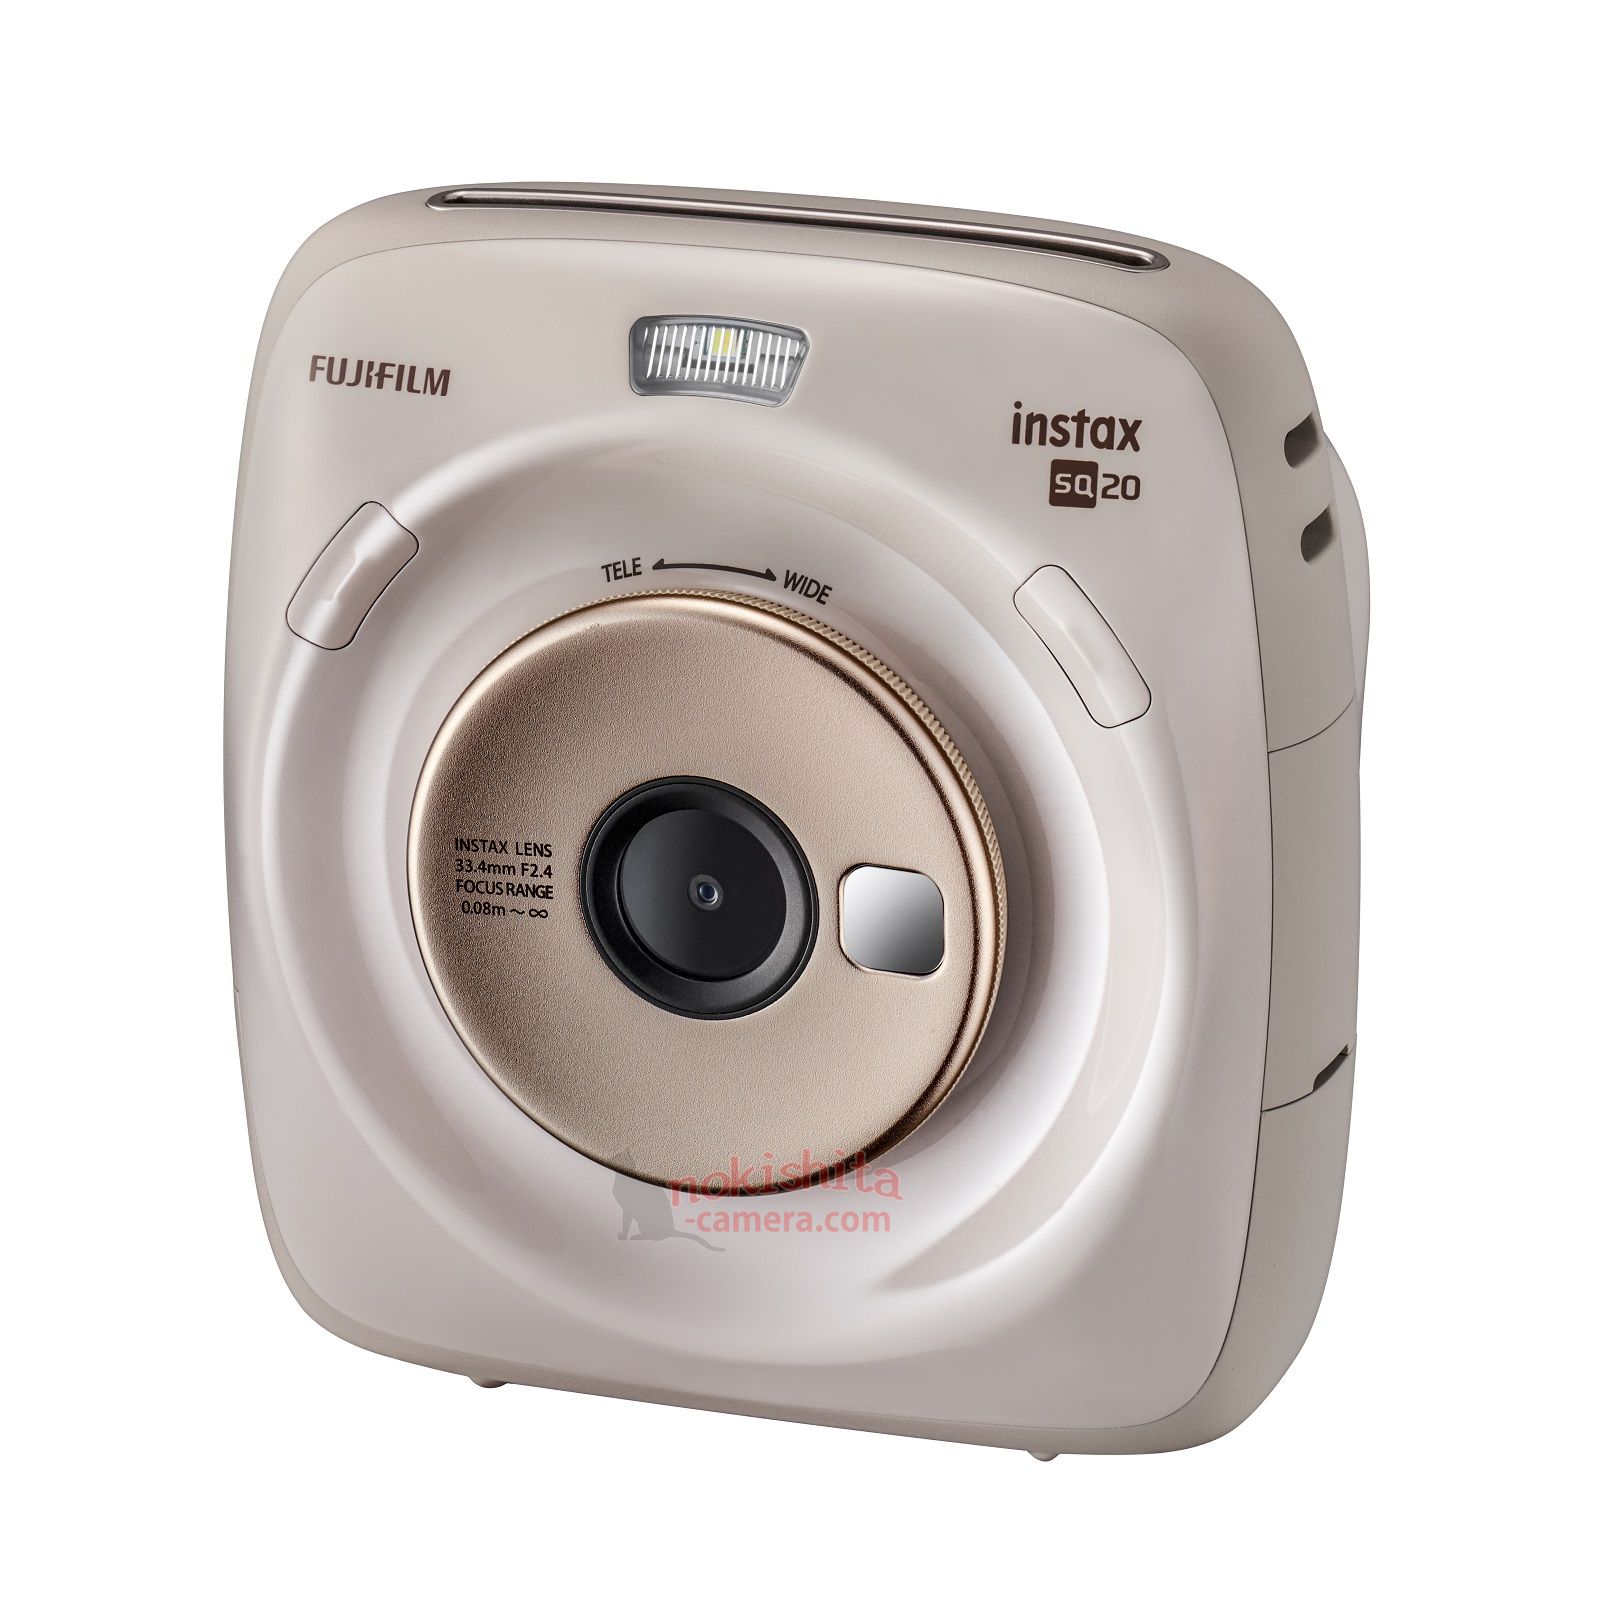 Herhaal Veranderlijk Golven Fujifilm instax SQUARE SQ20 Announced, Price for $200 - Camera News at  Cameraegg